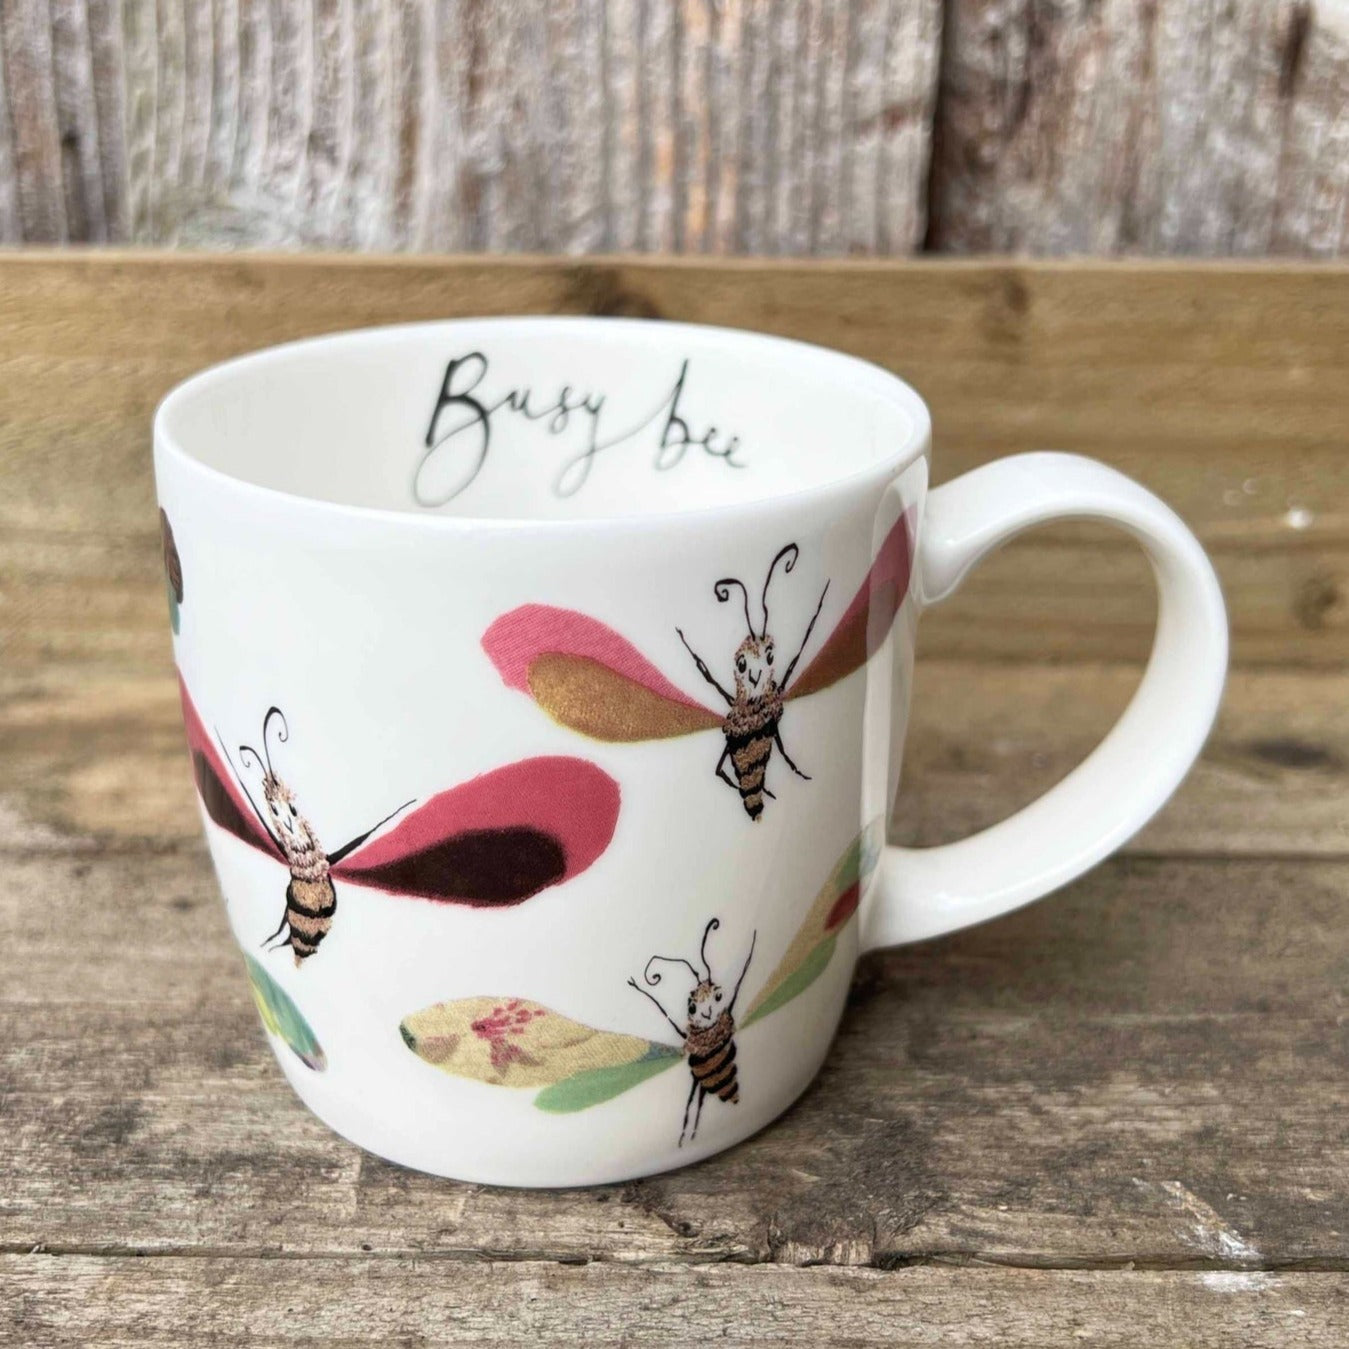 "Busy Bee" Mug - The Nancy Smillie Shop - Art, Jewellery & Designer Gifts Glasgow